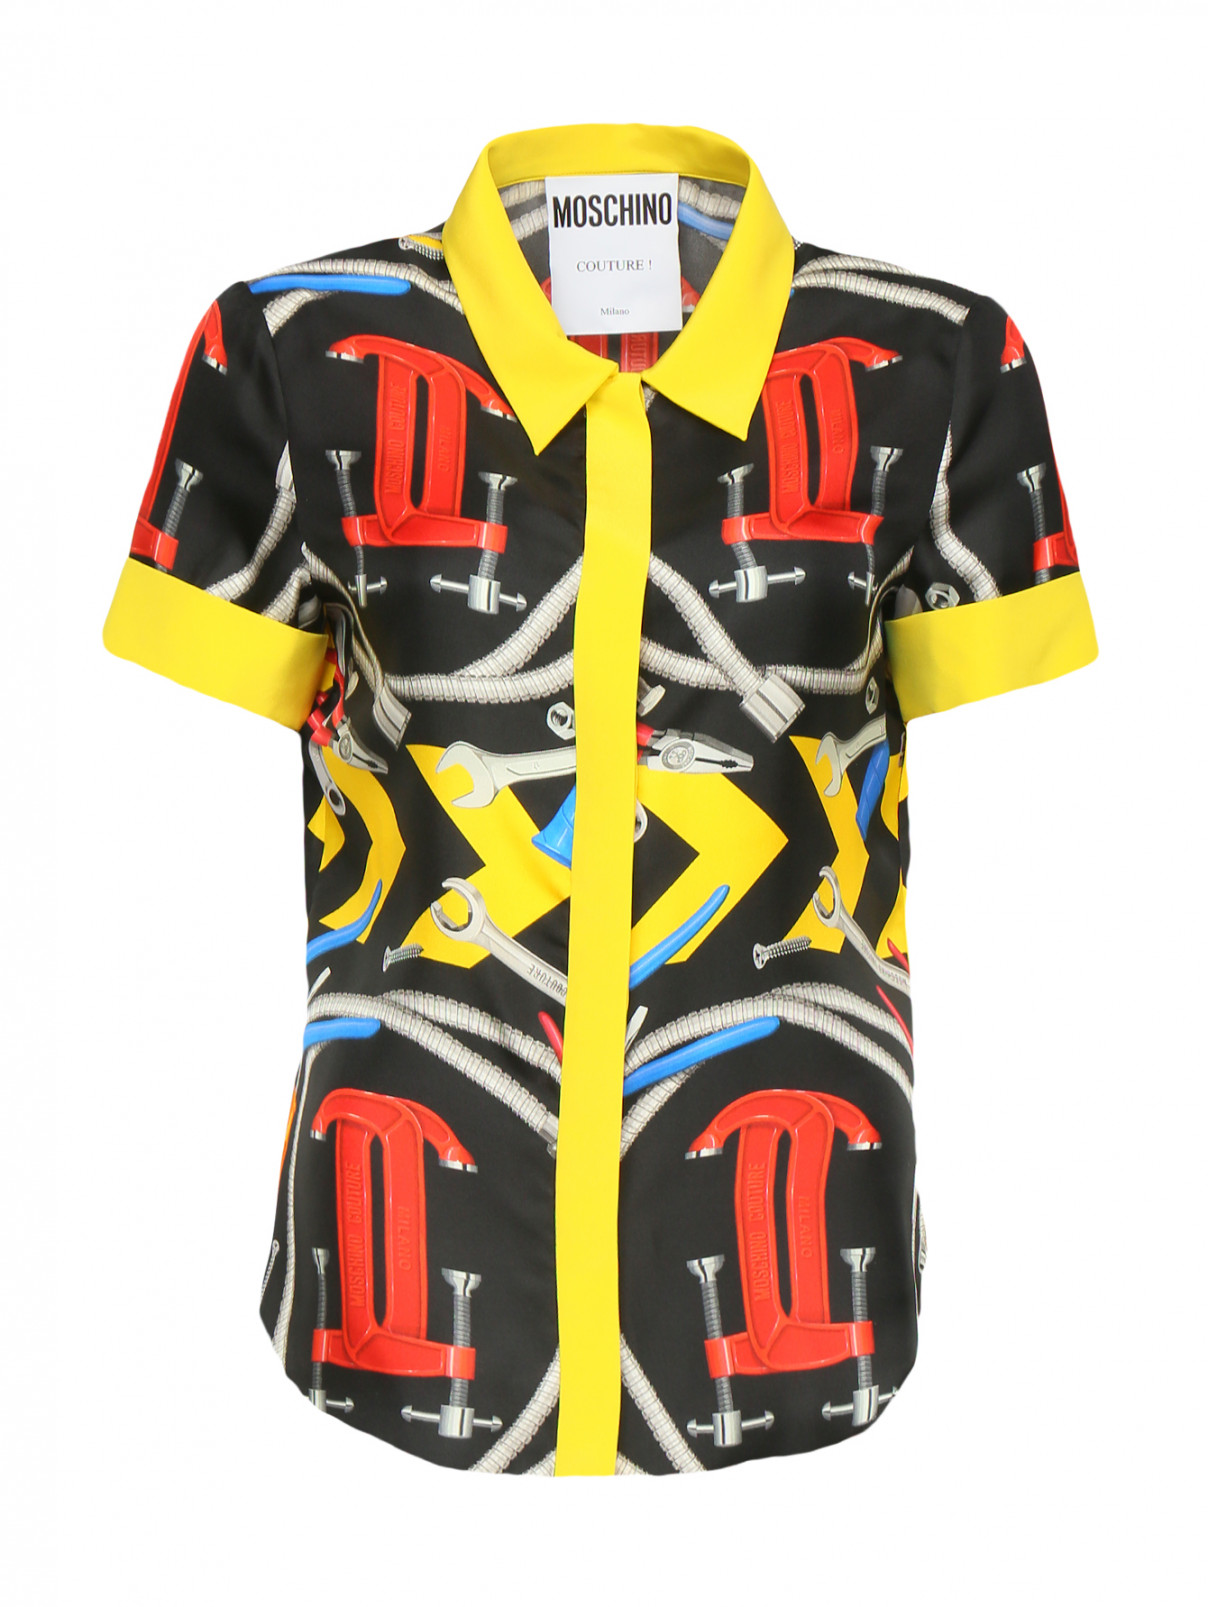 Блуза из шелка с узором Moschino Couture  –  Общий вид  – Цвет:  Узор